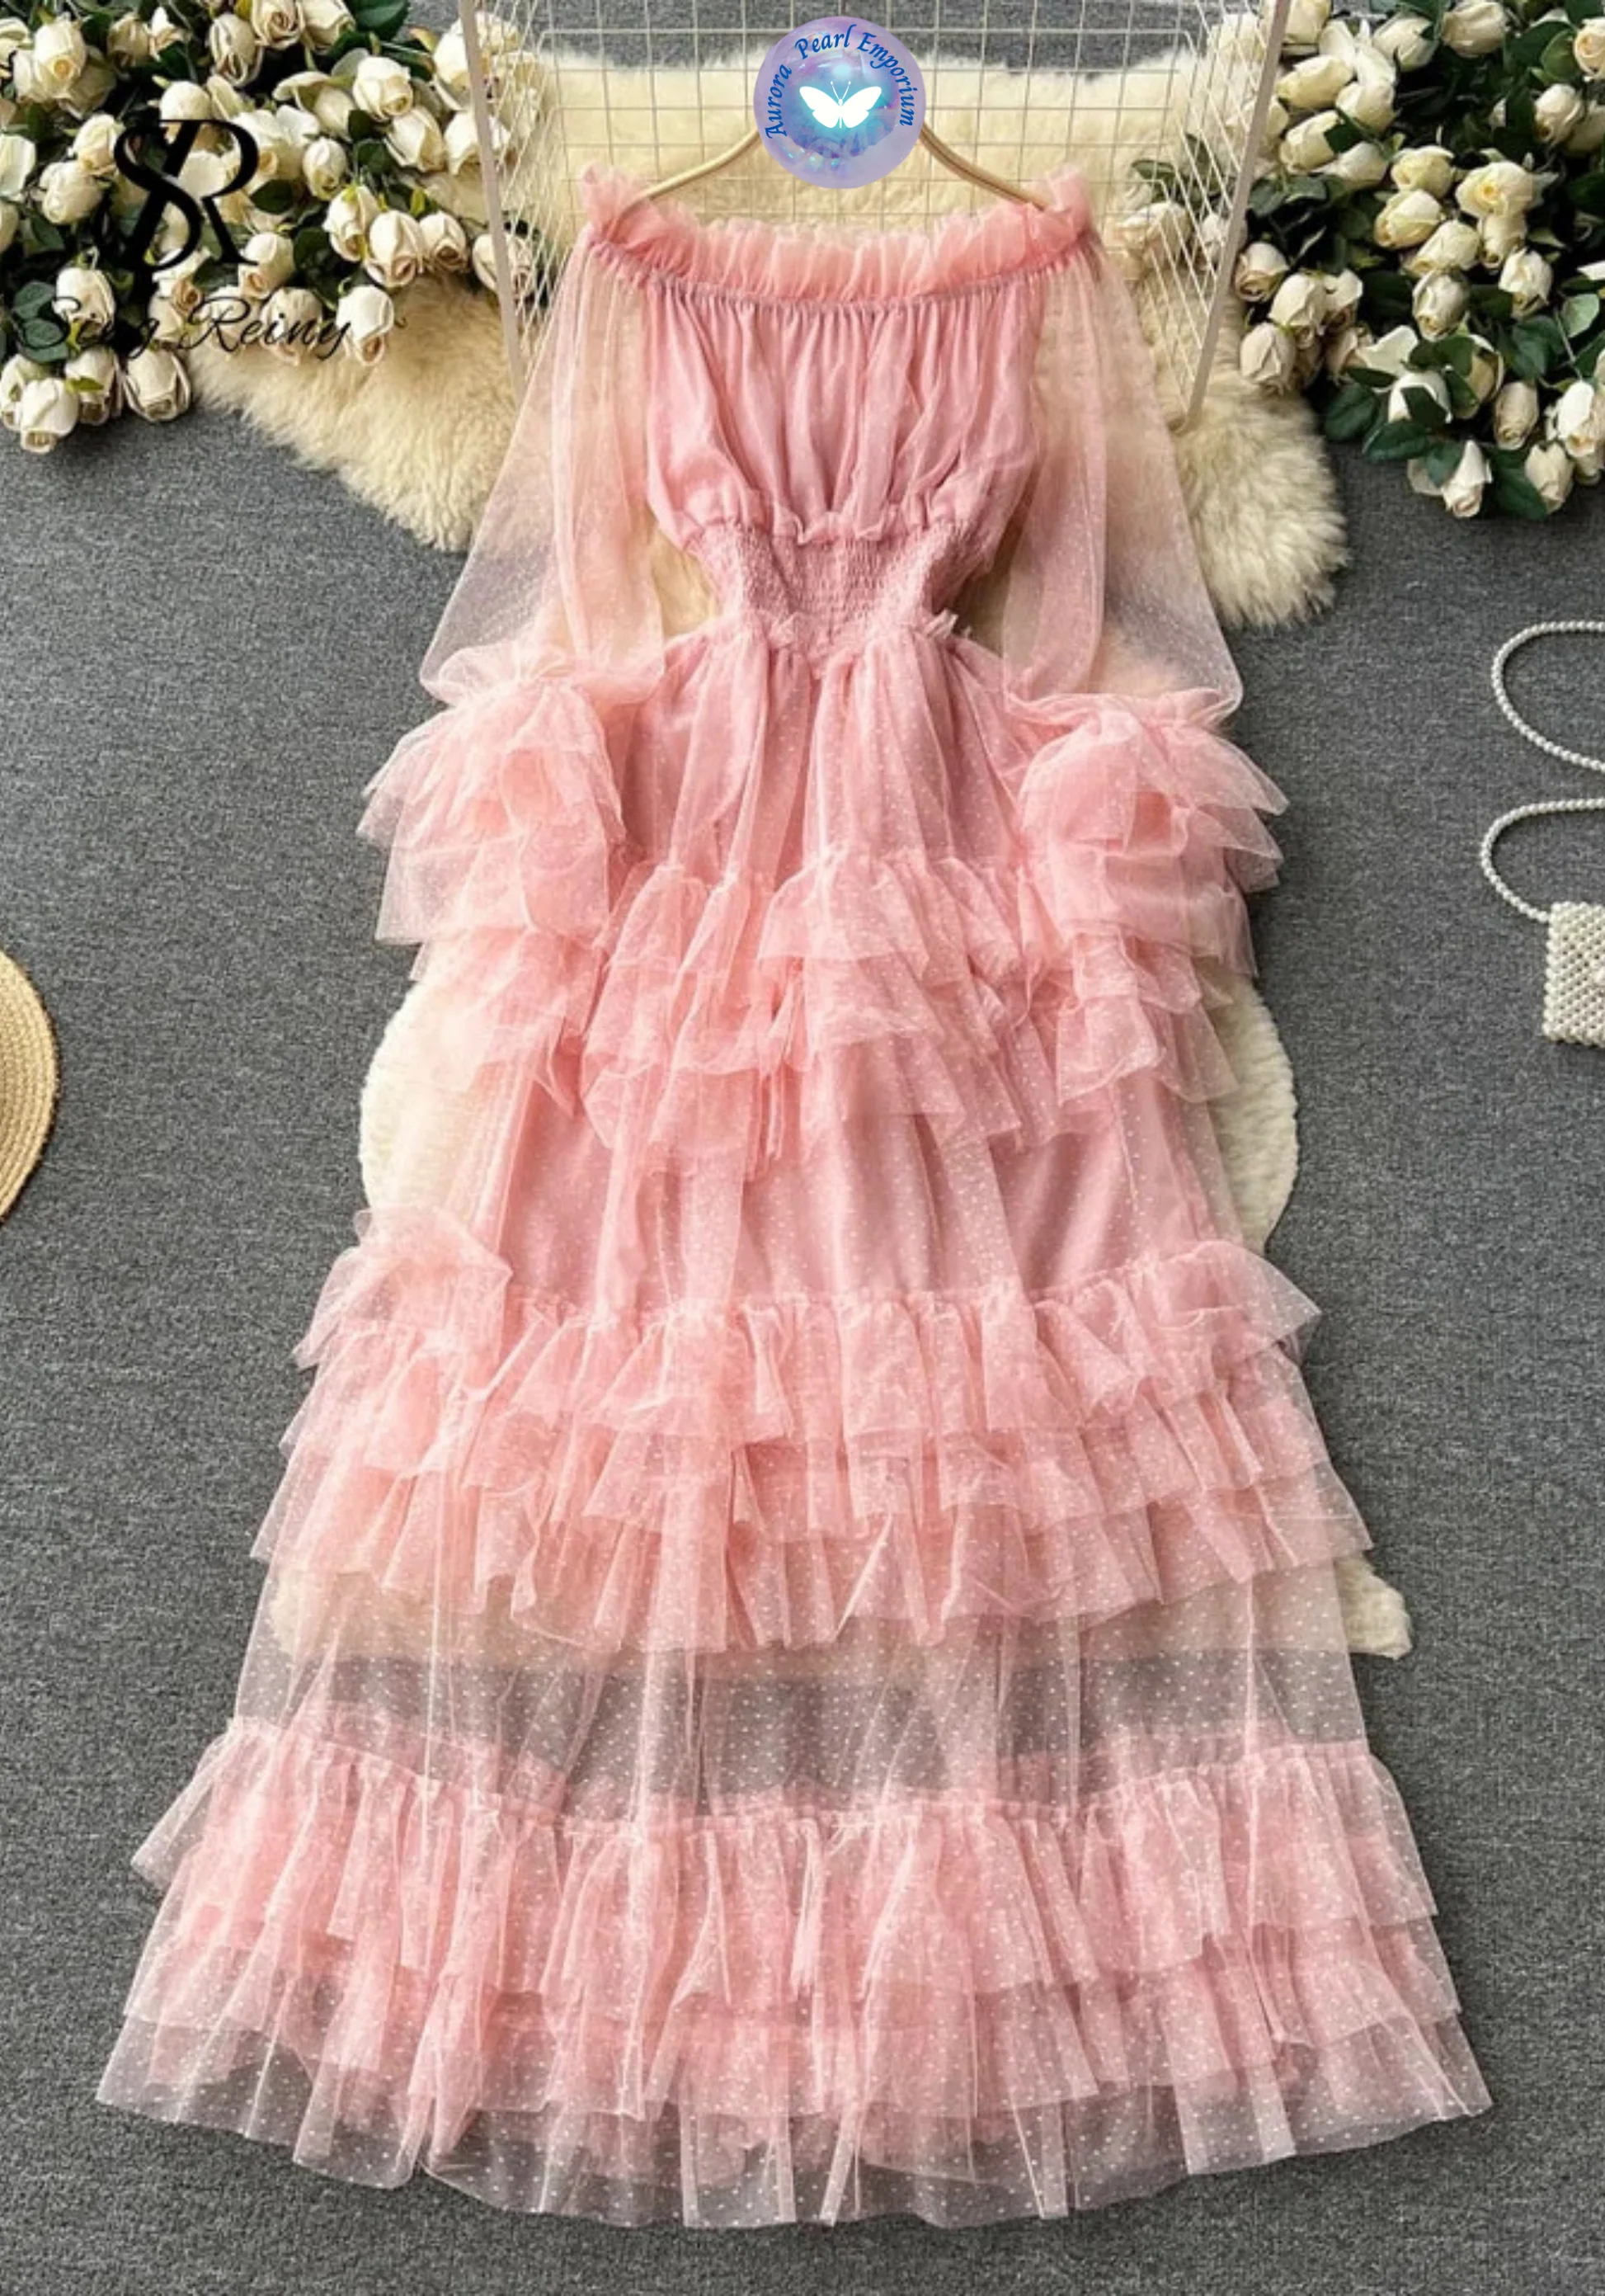 a pink dress on a white fur rug